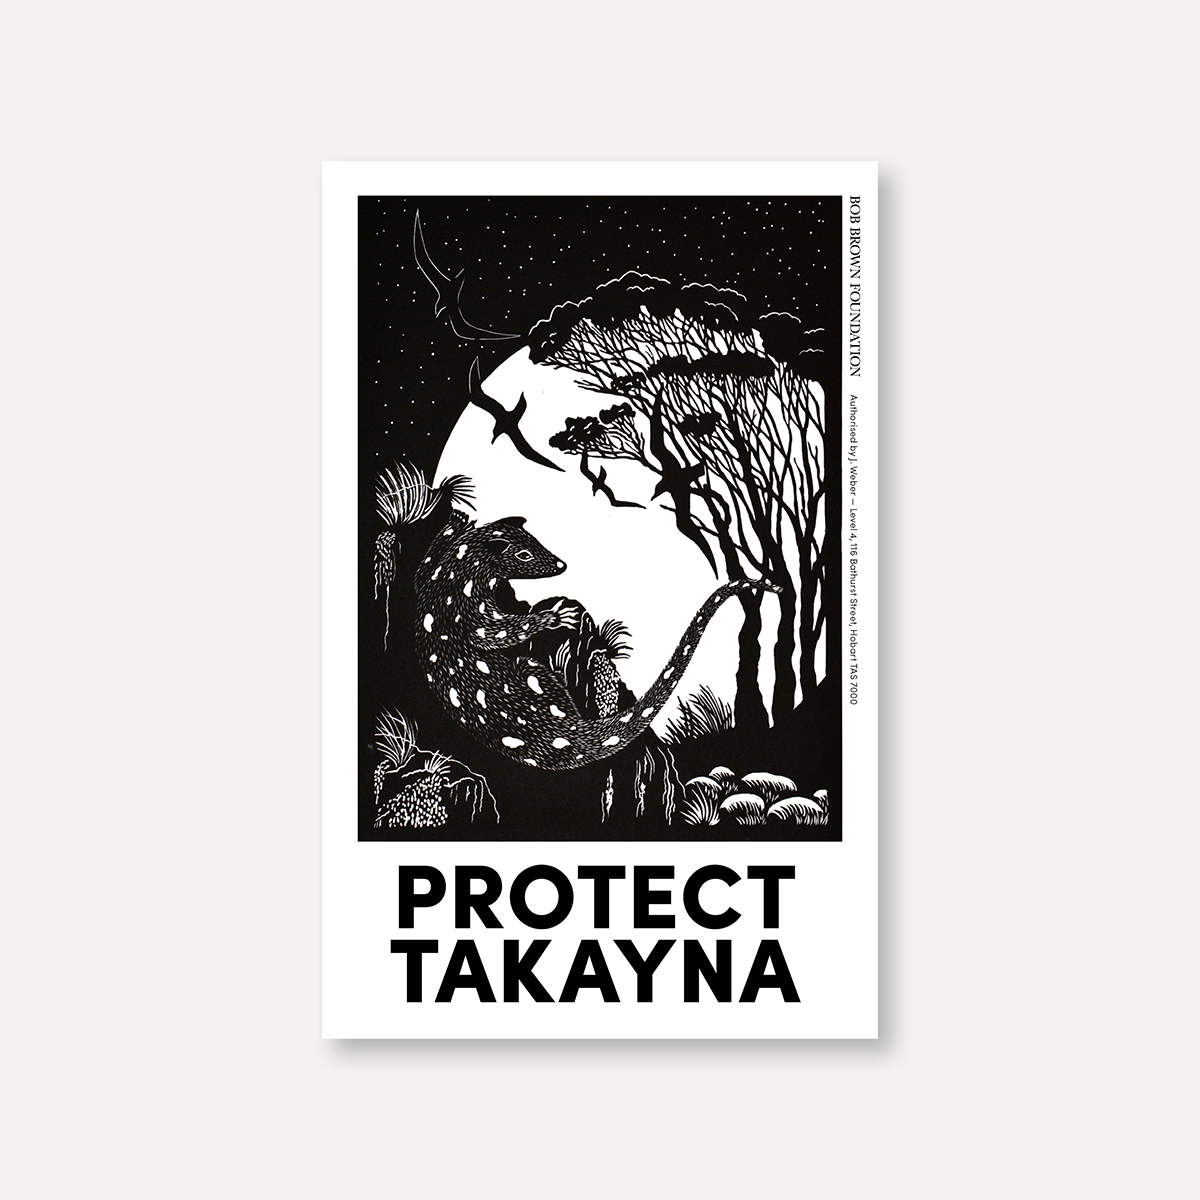 Protect takayna – Anne Conran sticker